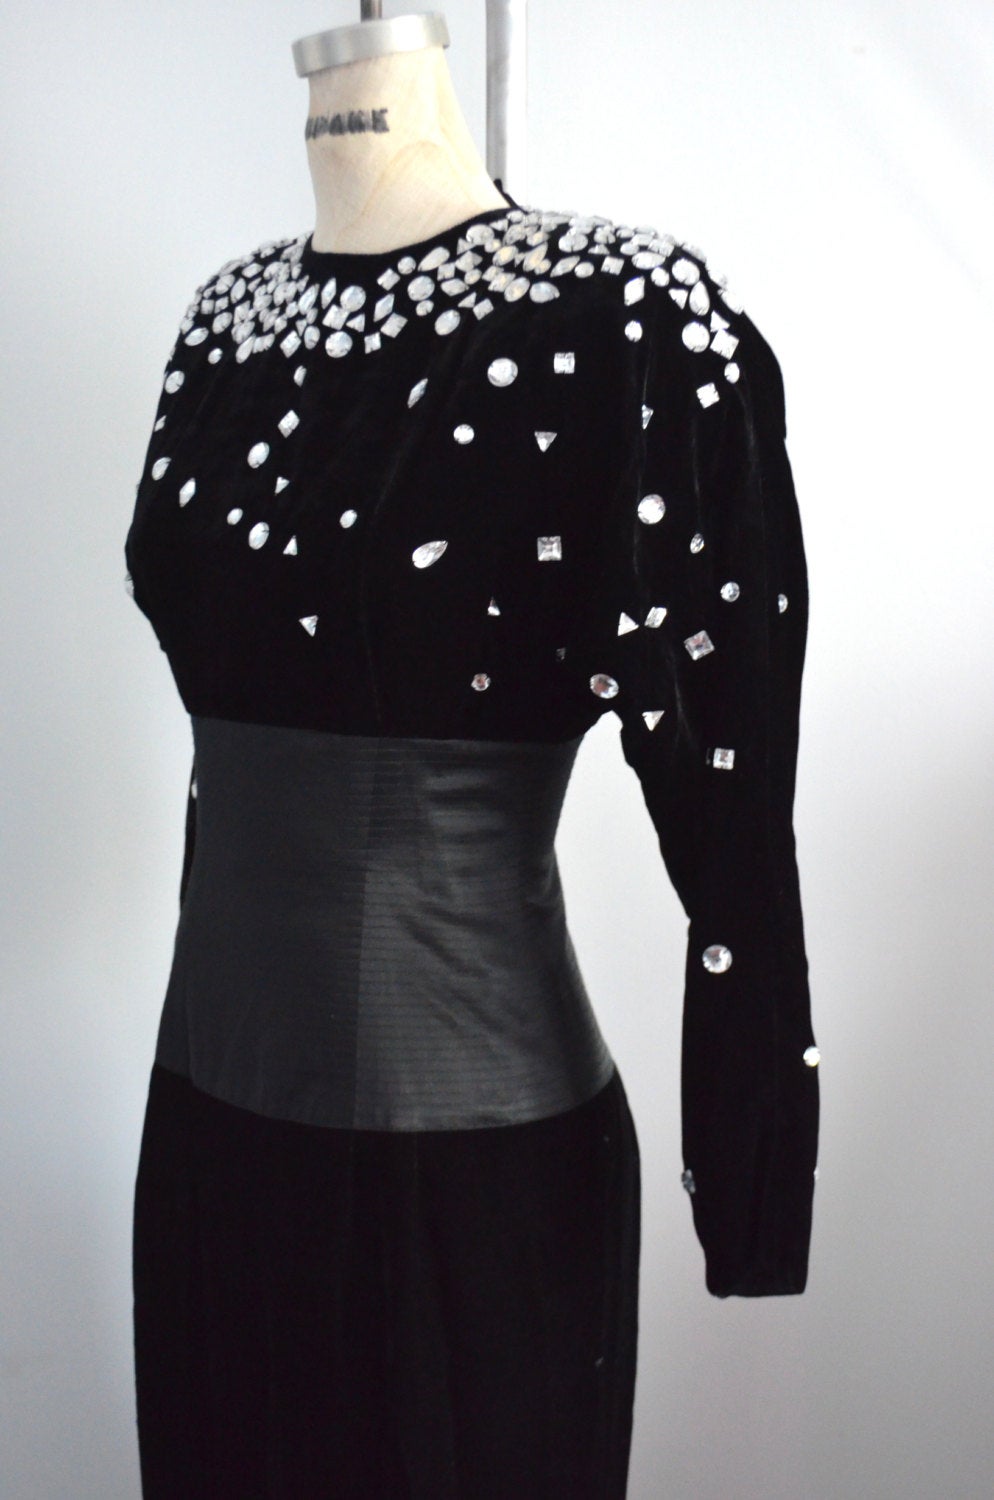 Black Velvet Velour Bejeweled Dress With Crystals Mid Length 1980S